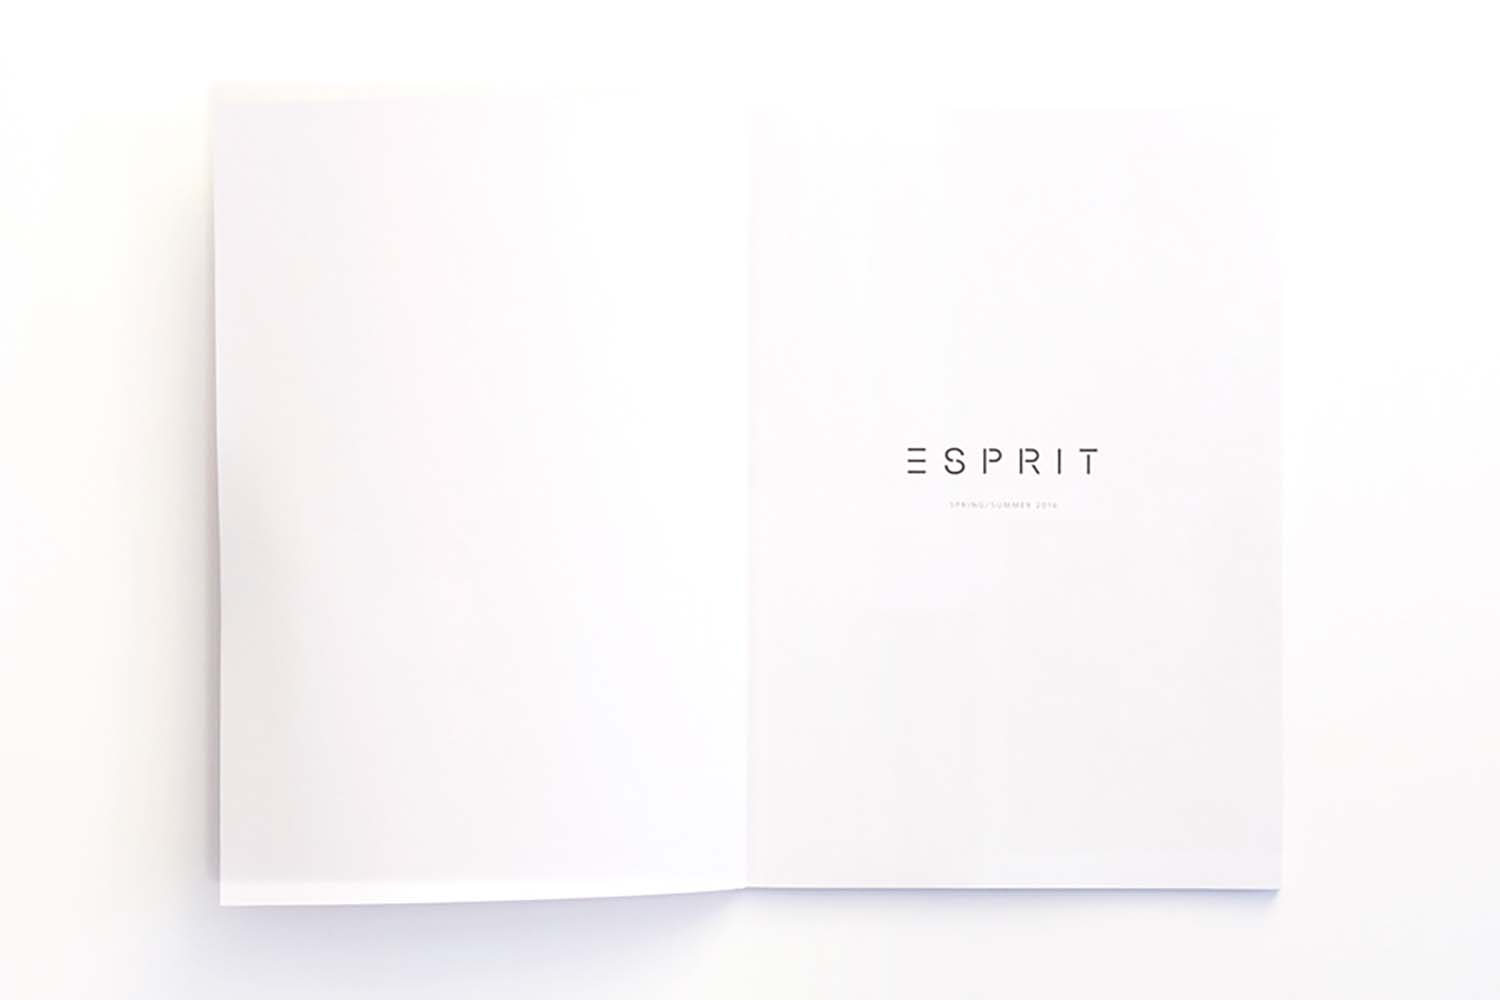 Esprit by Stina Daag